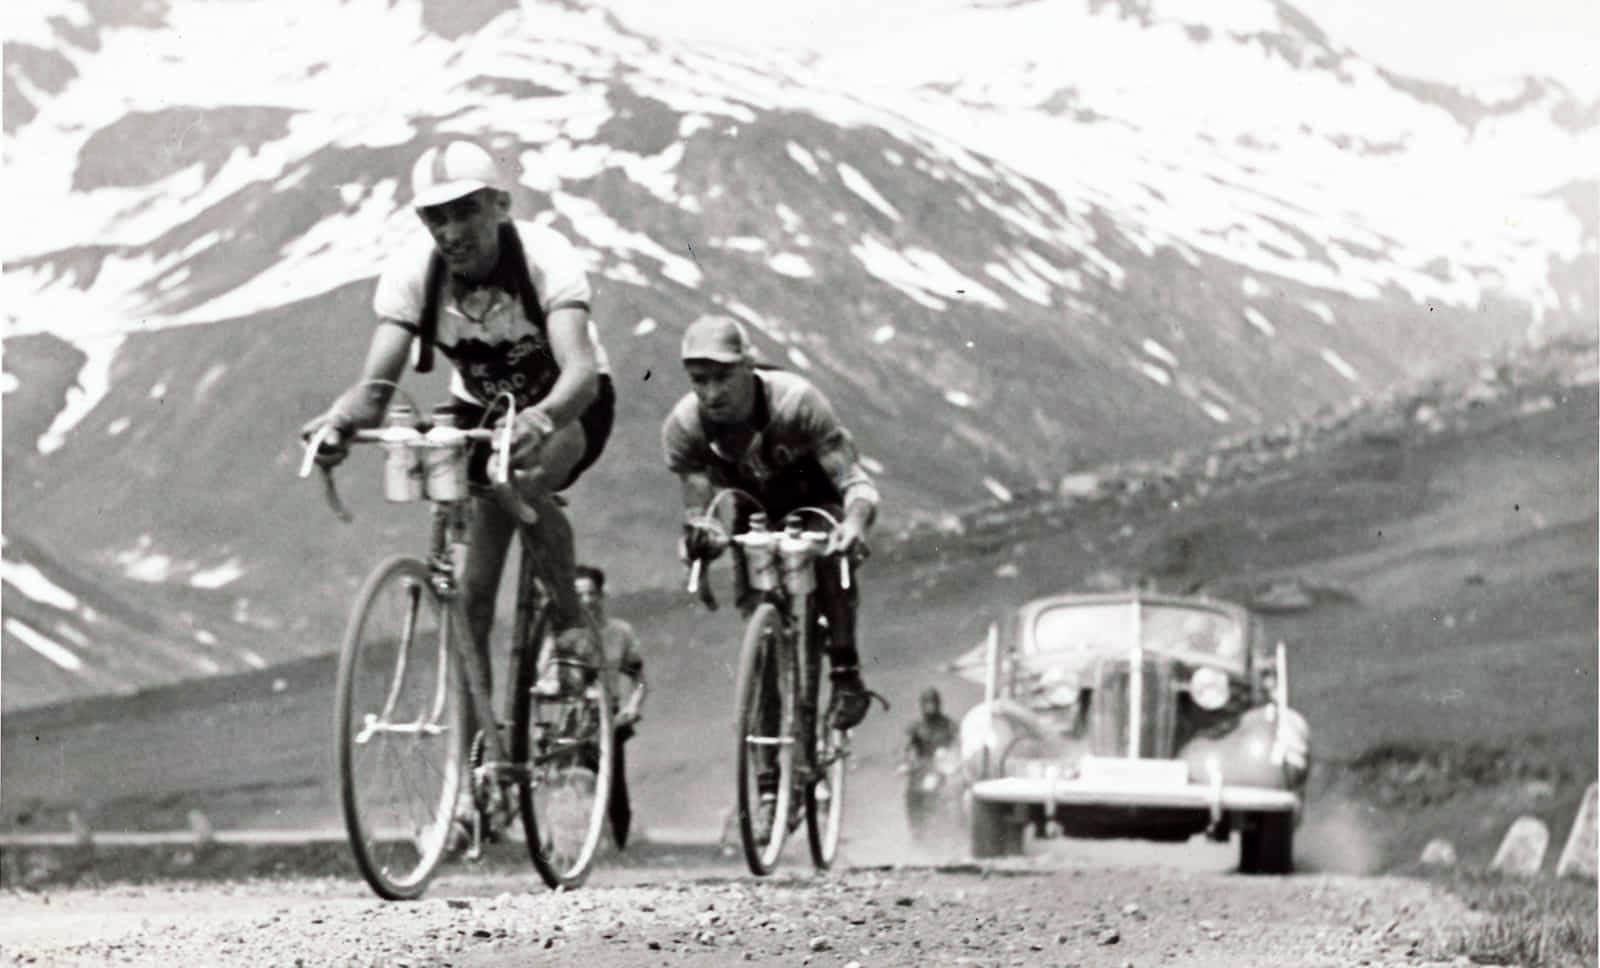 Scene taken from the original Tour de Suisse in 1933 on gravel roads during WW2